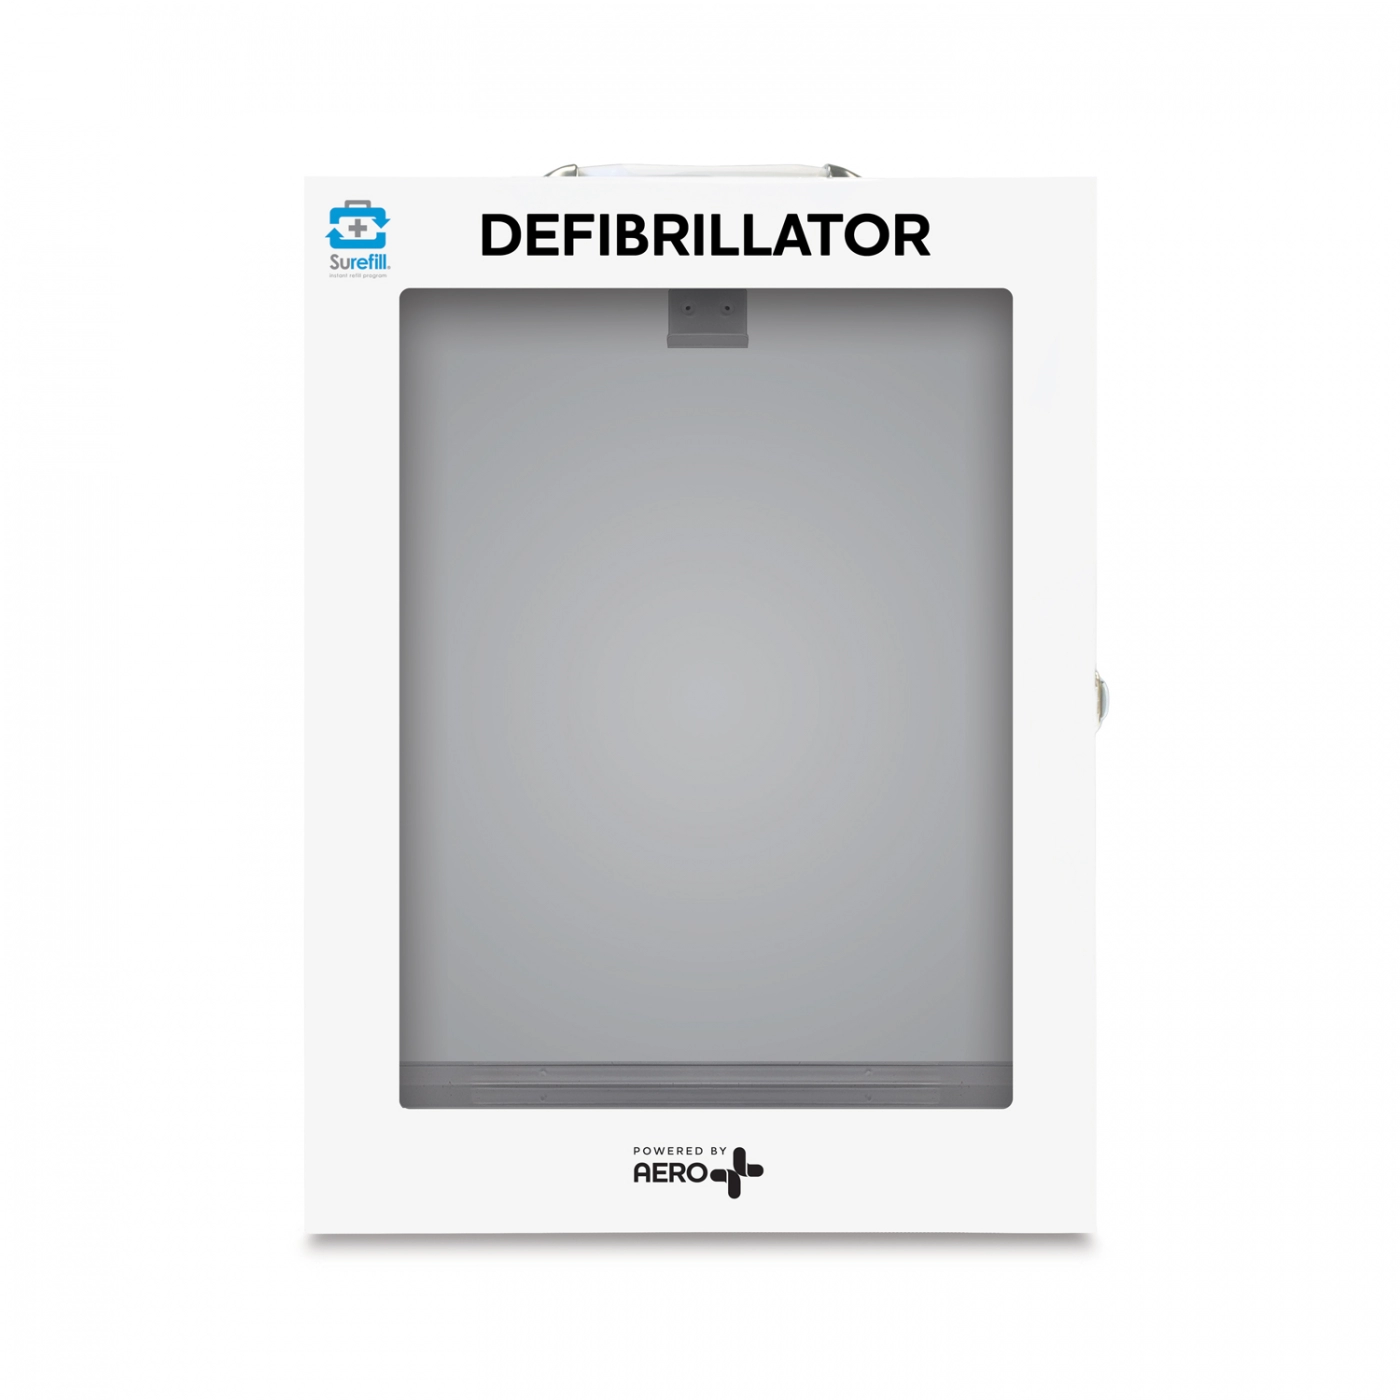 Defibrillator - Wall Cabinet